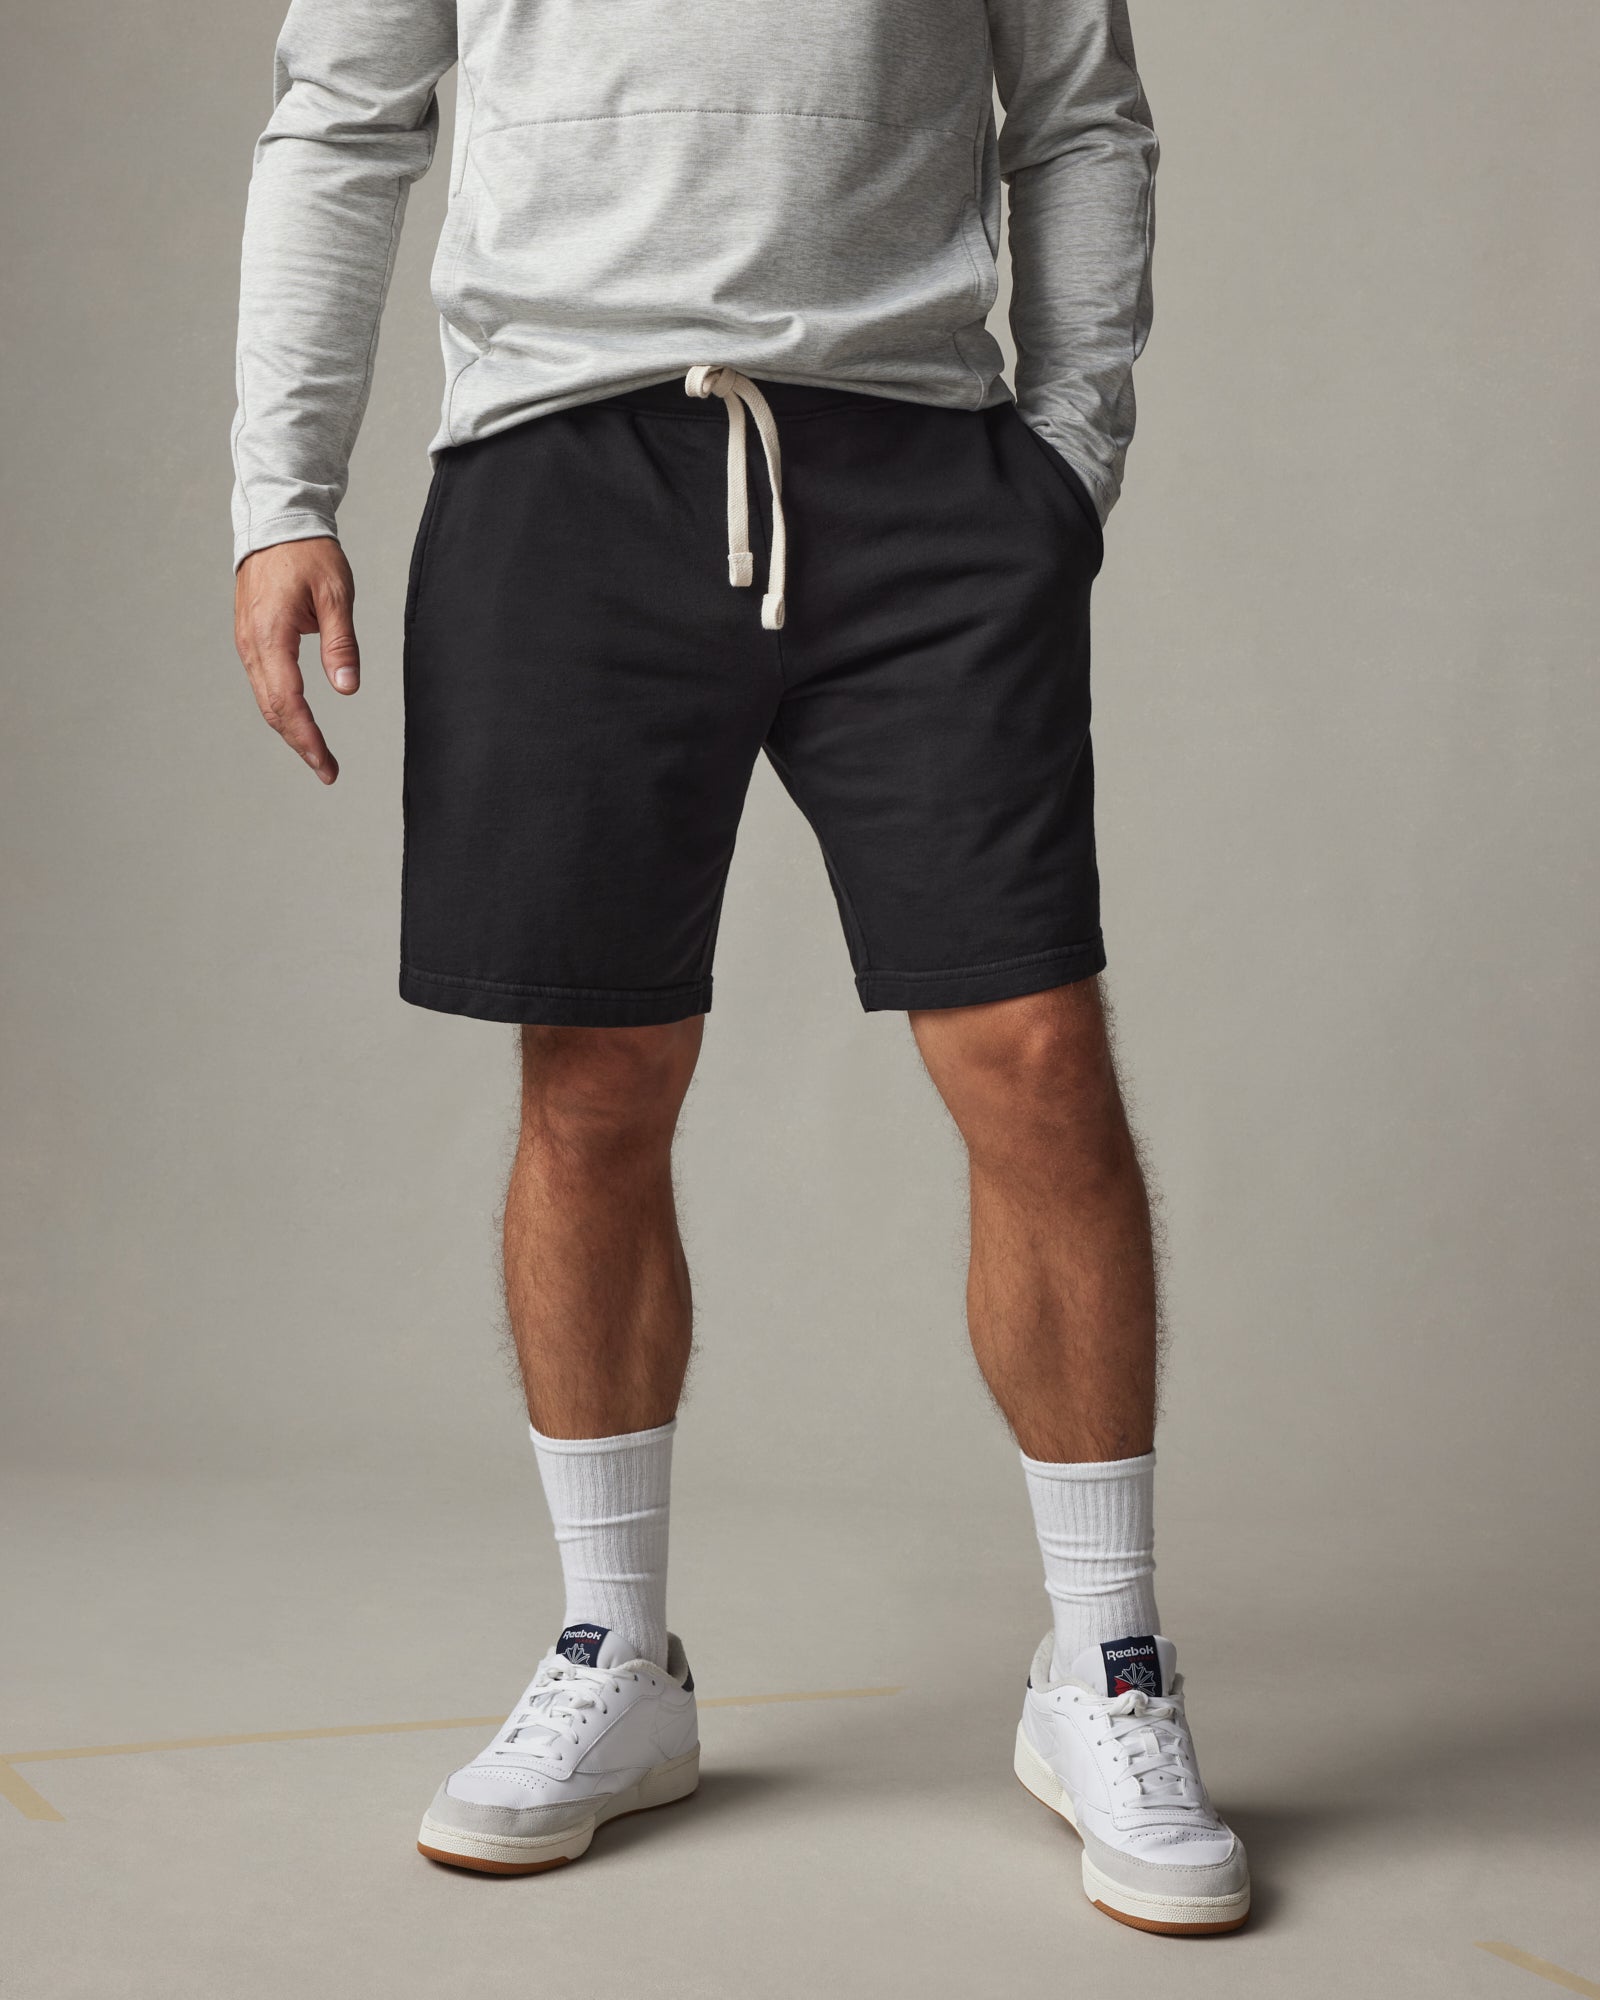 Mens Jogger Shorts - Sweat Shorts for Men